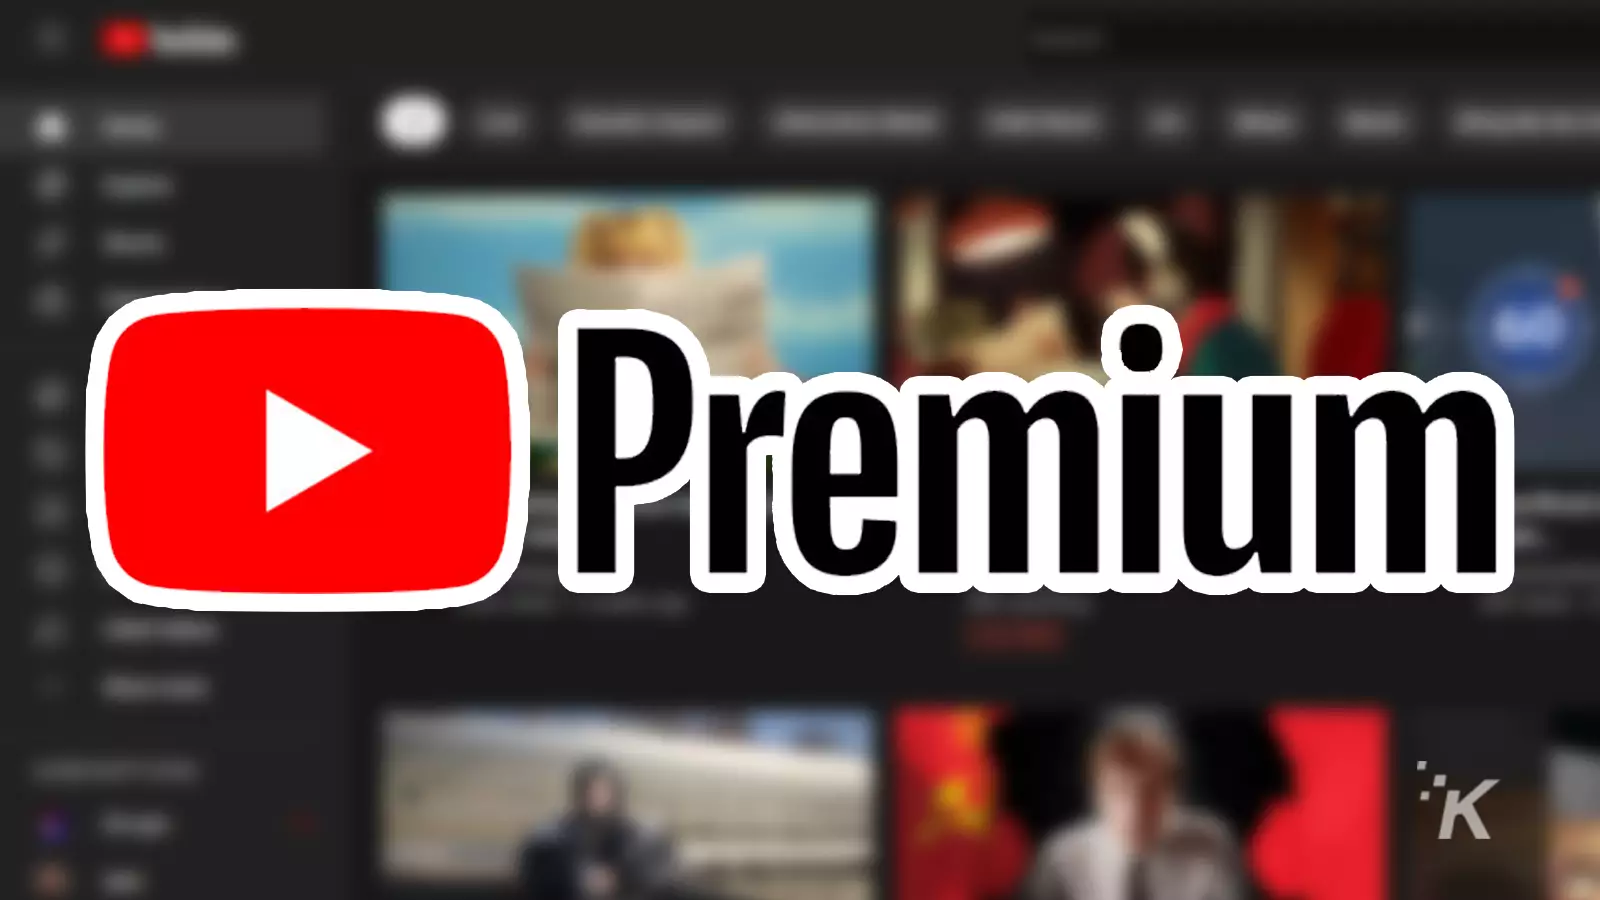 Advantages of YouTube Premium